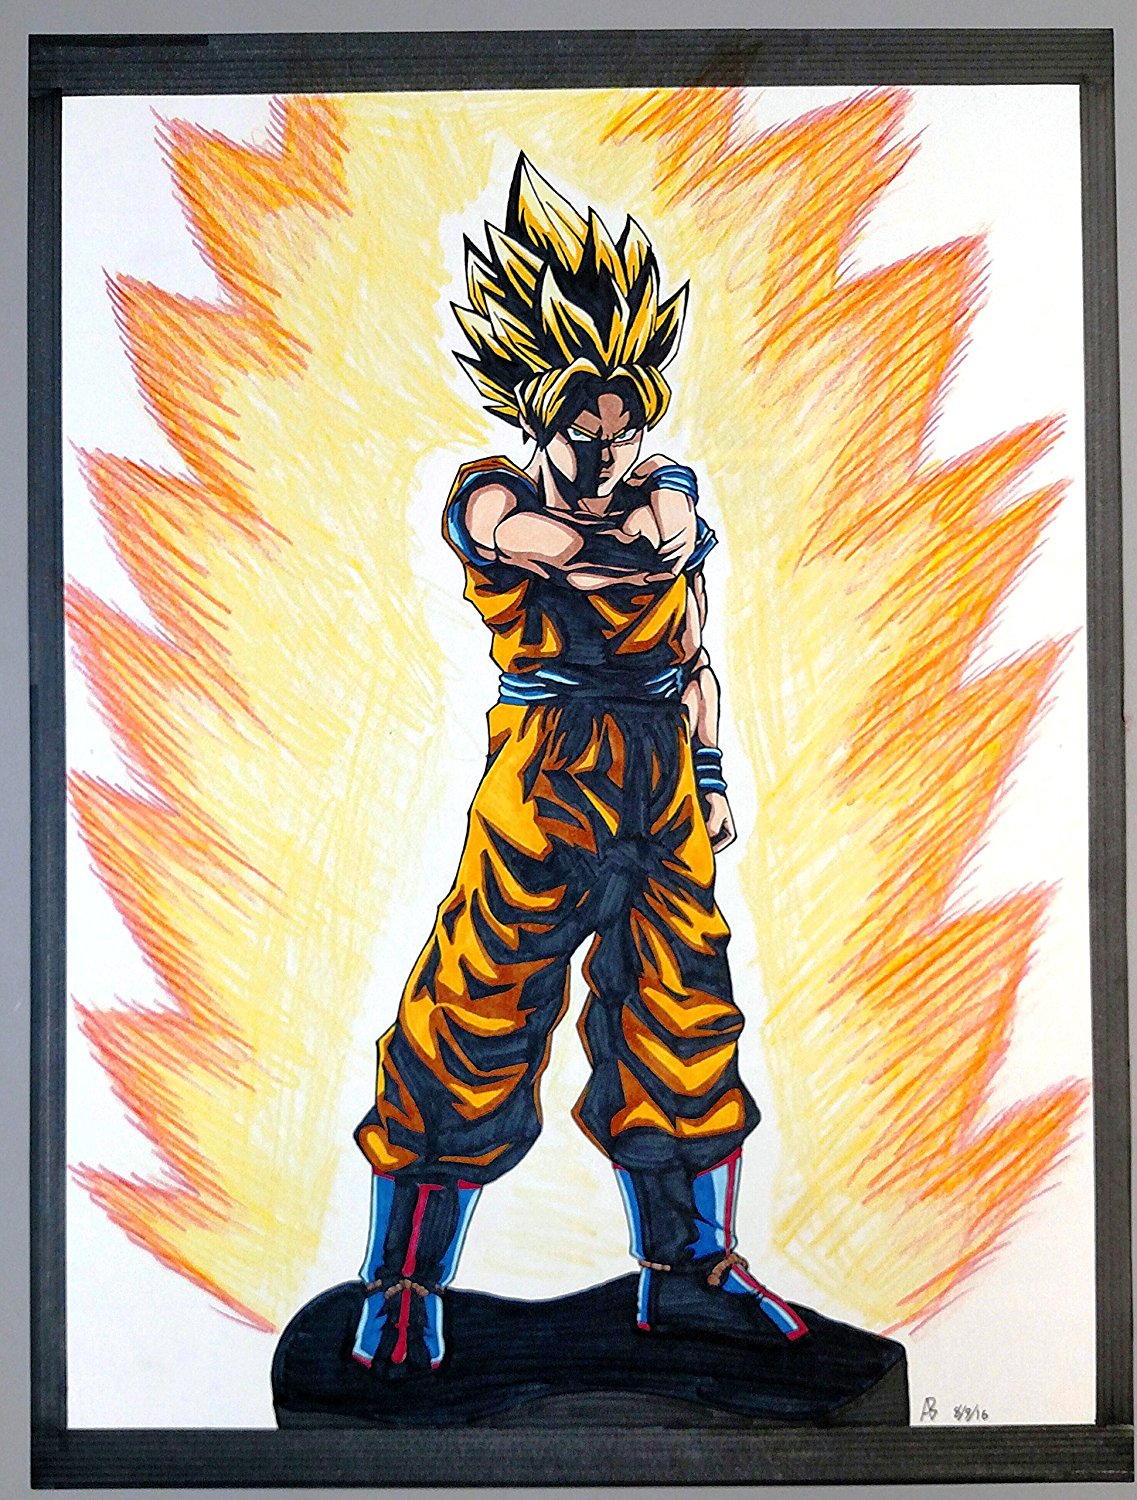 Dragon Ball Z Goku Drawing at PaintingValley.com | Explore ...